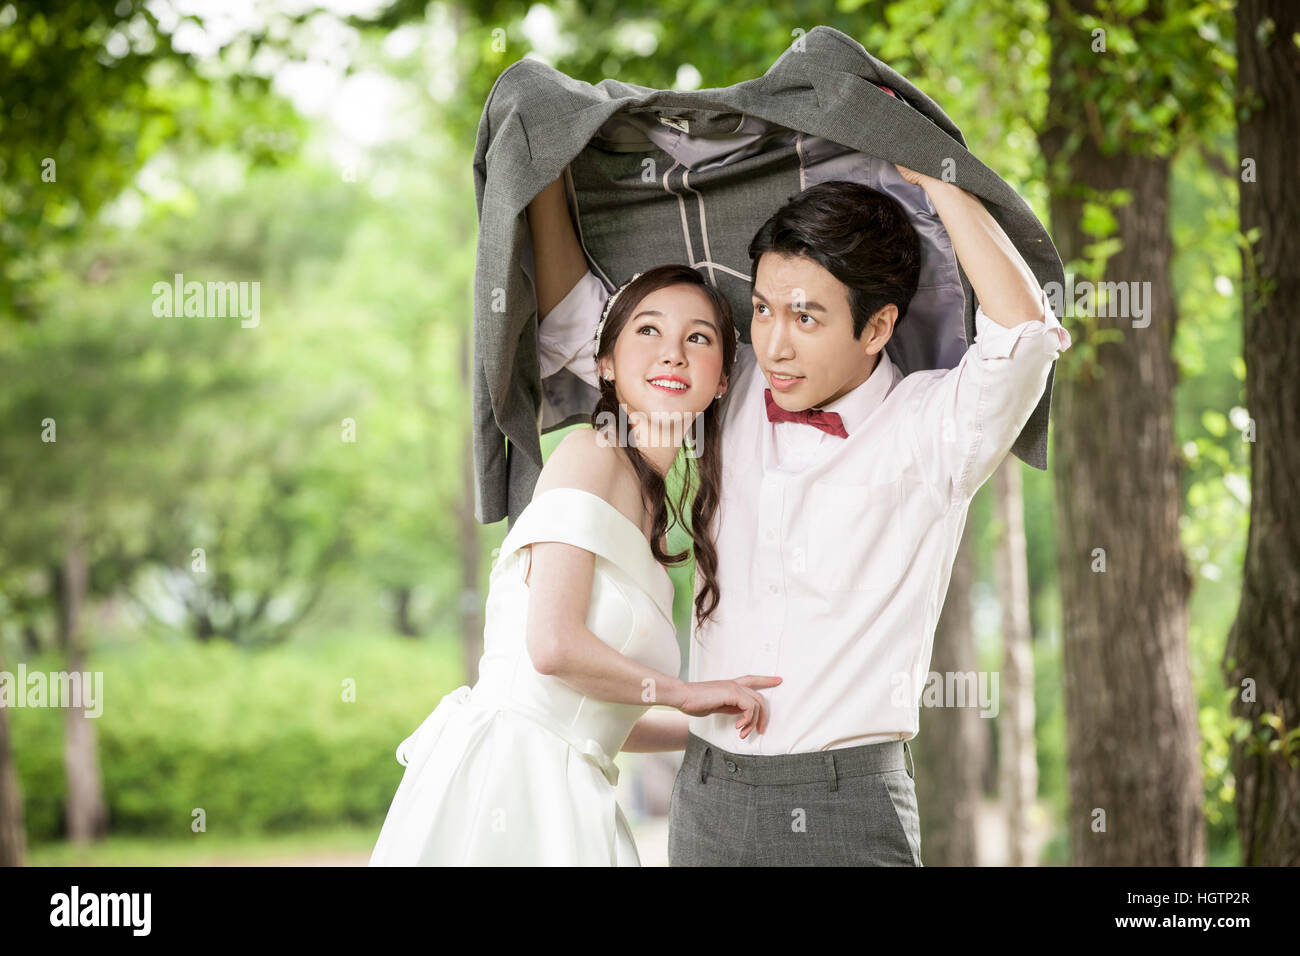 Young romantic wedding couple posing outdoors Stock Photo - Alamy